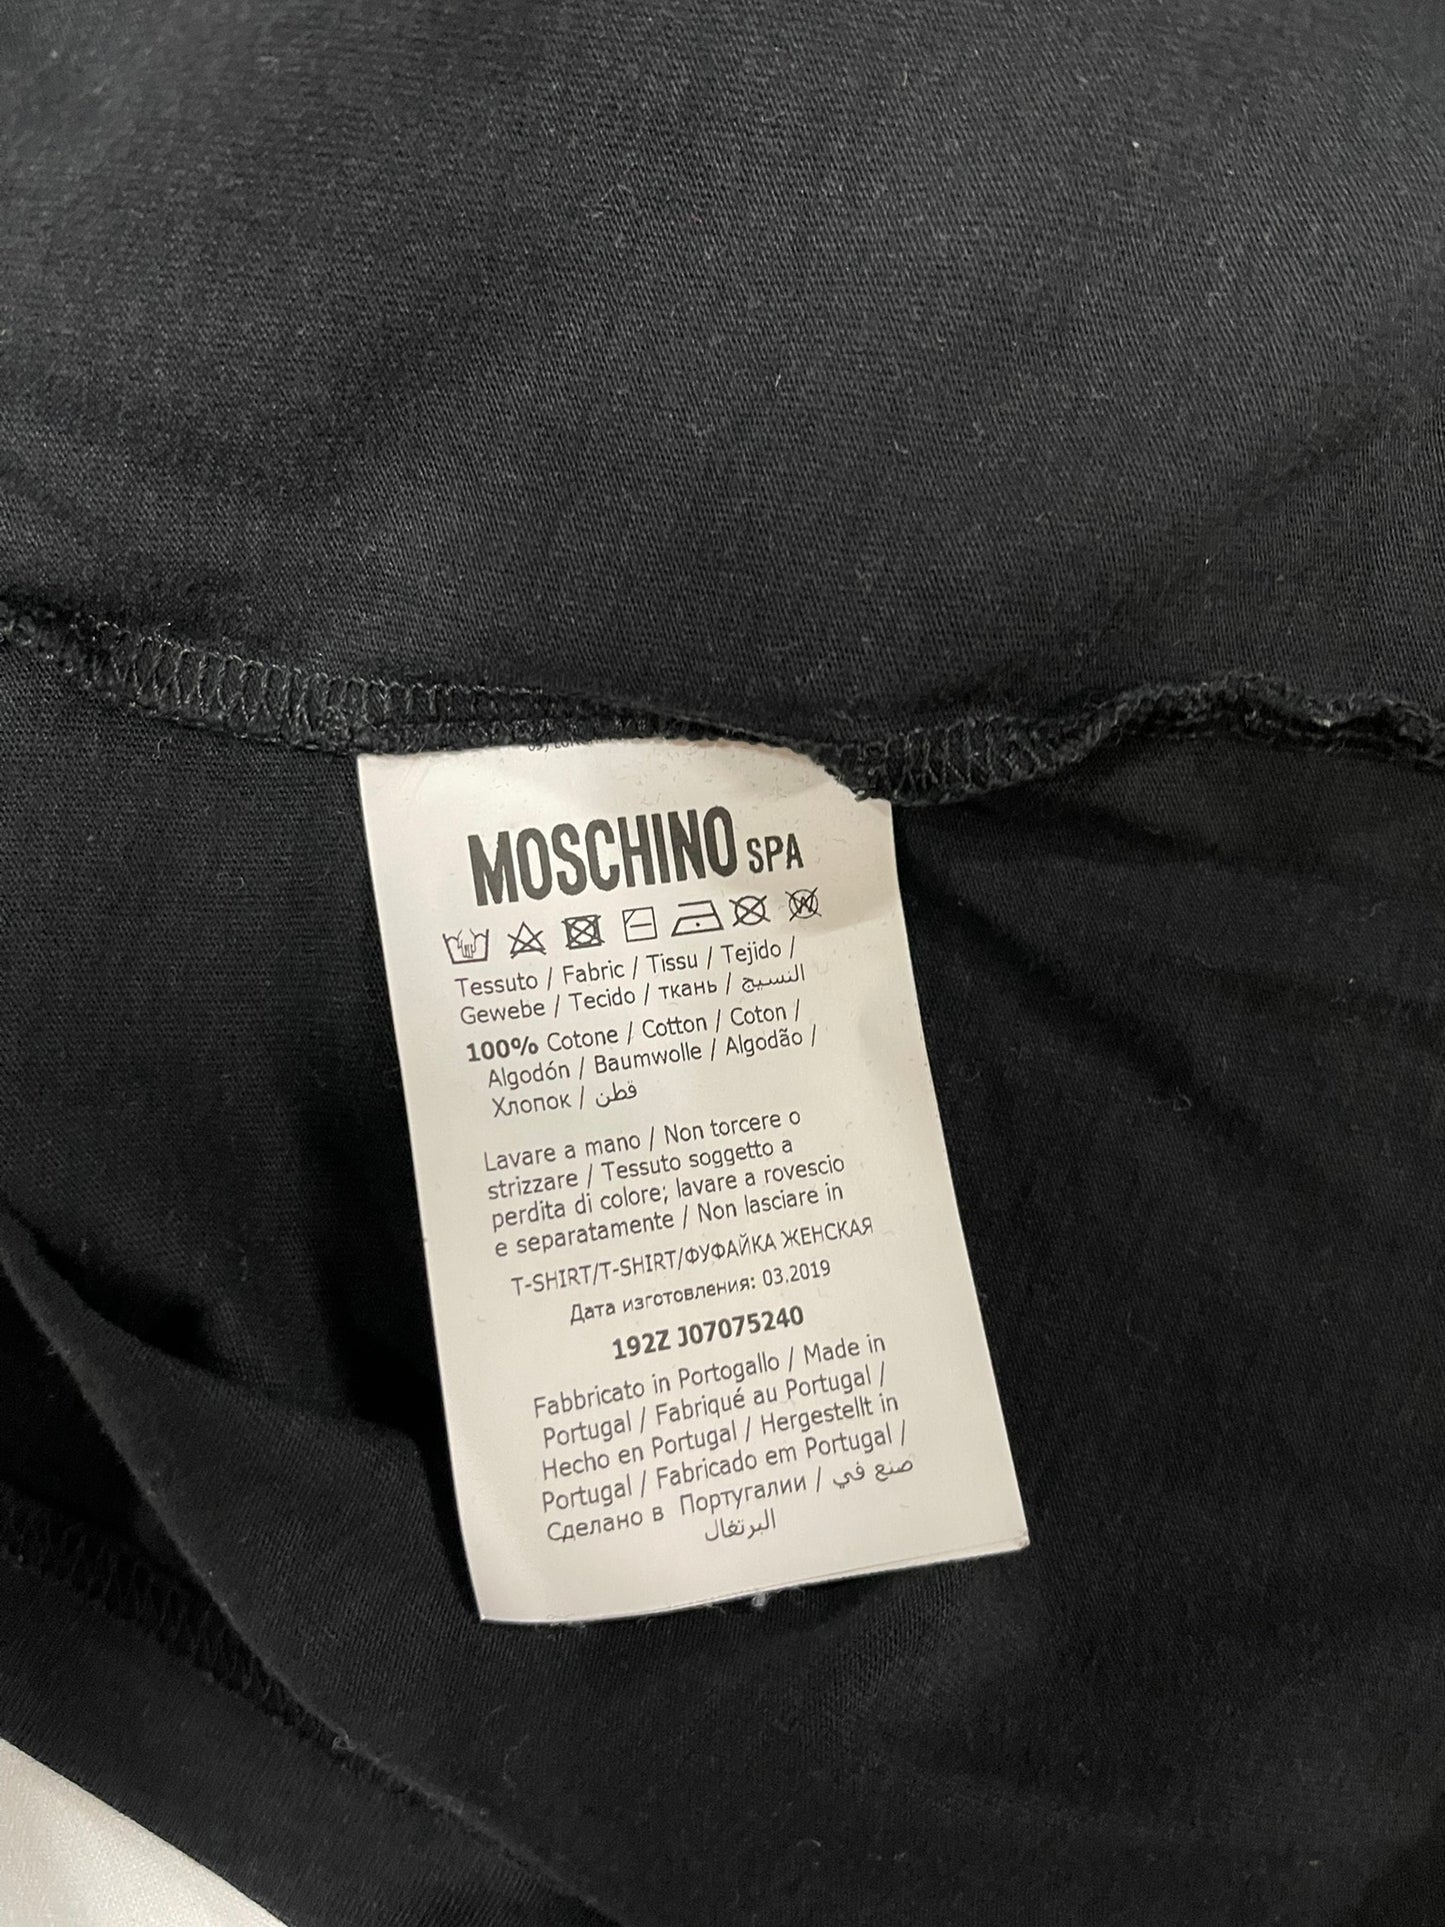 Moschino Black Top Size 36